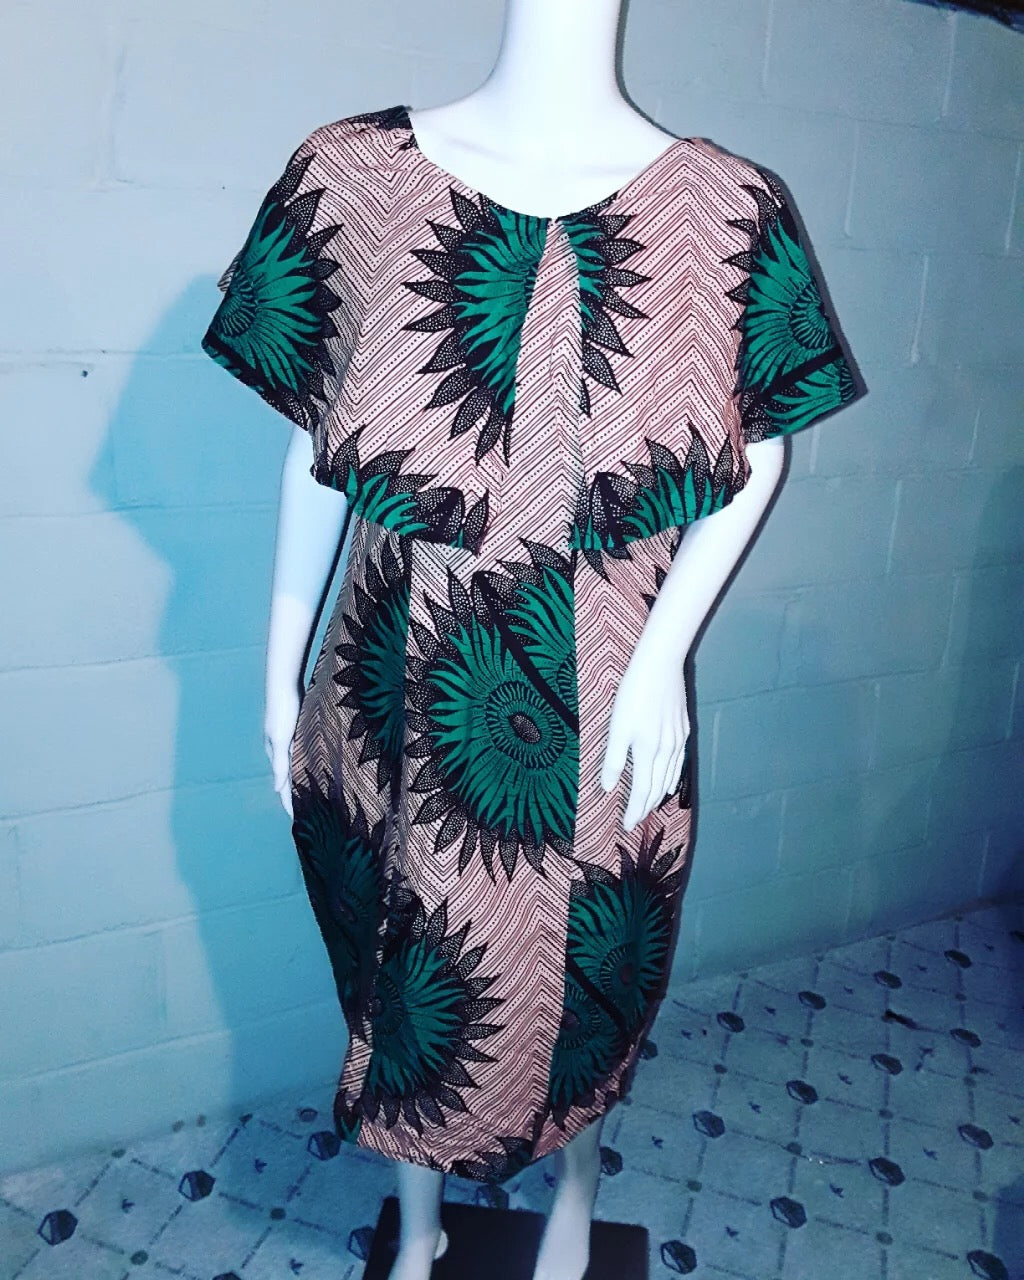 Multicolor Colored African Print Dress-Sz M